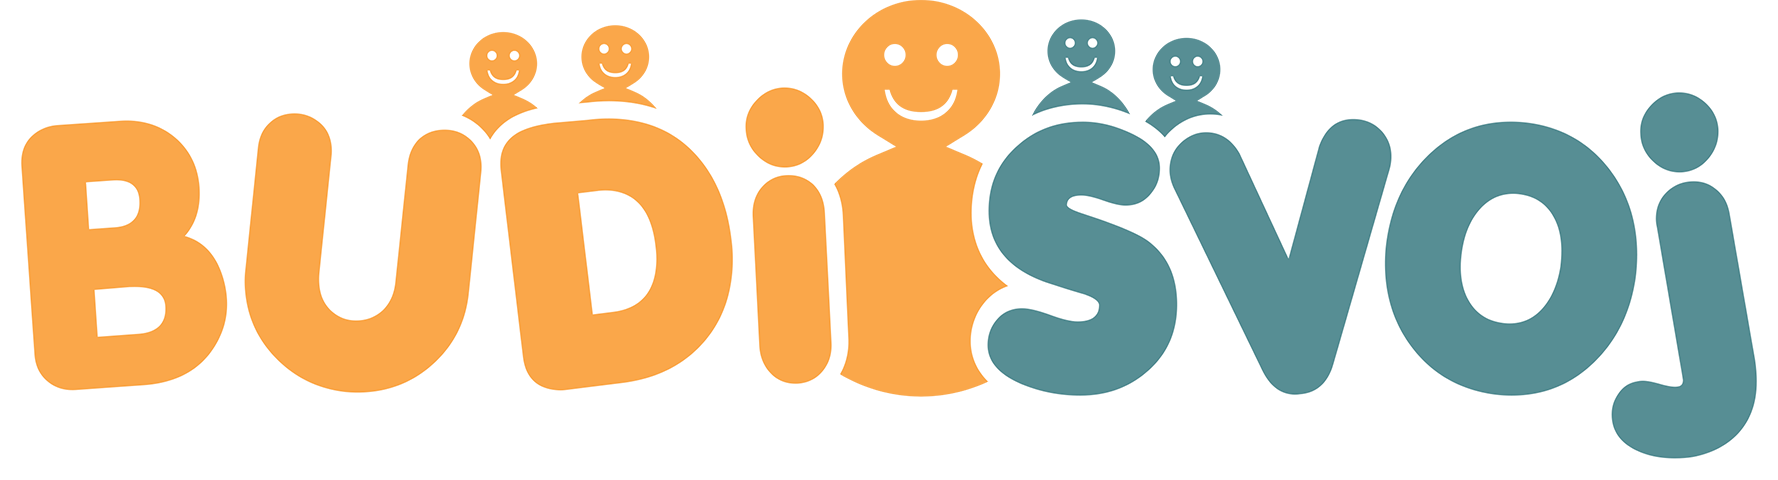 PBS - Logo - BUDI SVOJ -480px